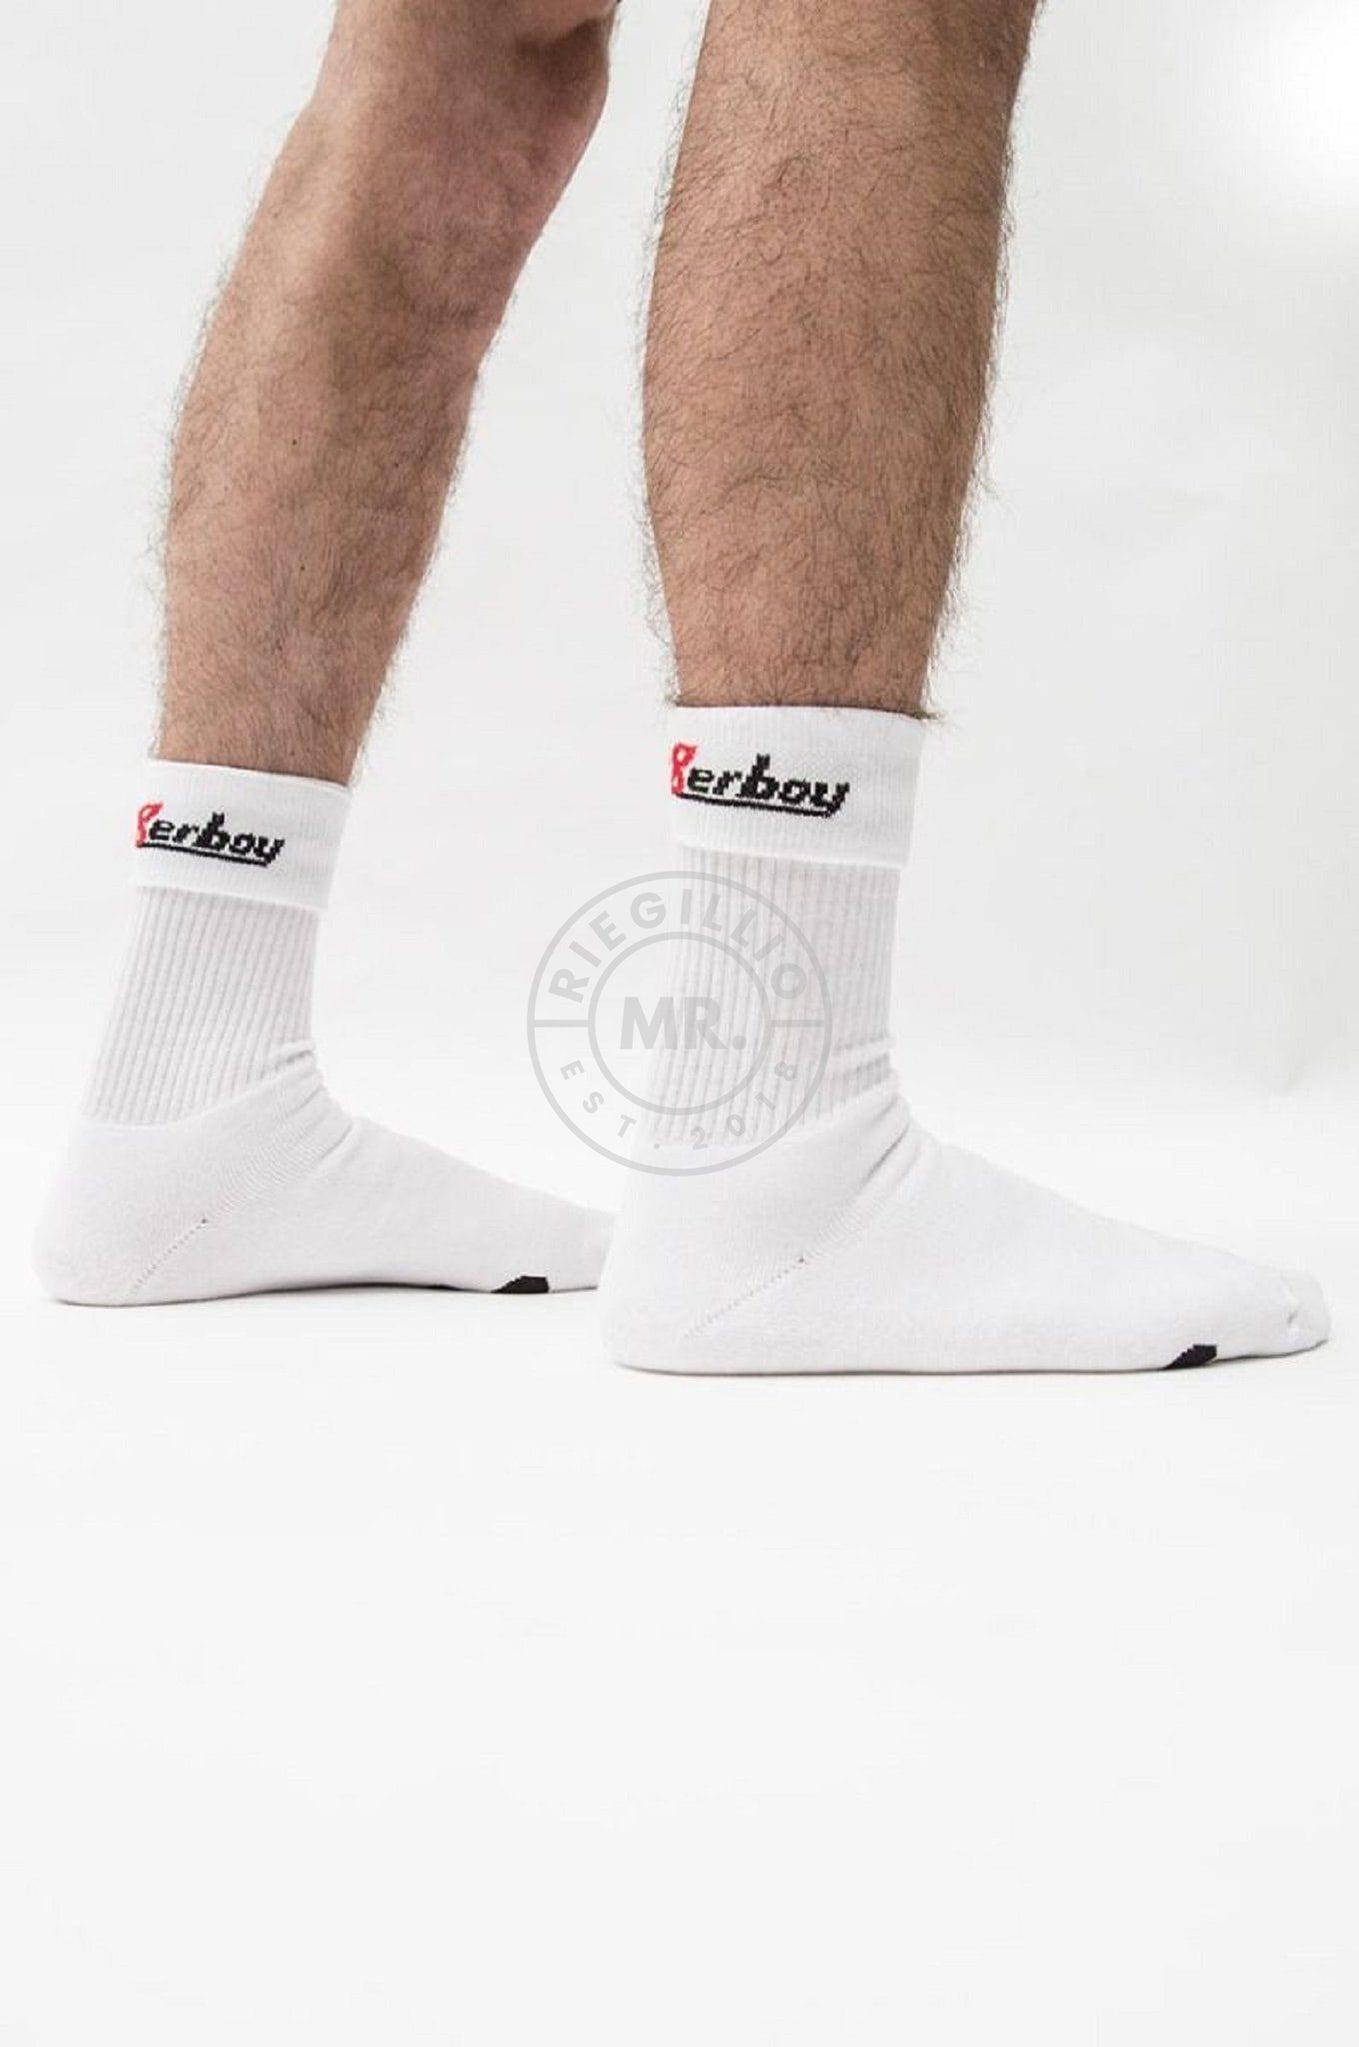 Sk8erboy PUPPY Socks White-at MR. Riegillio